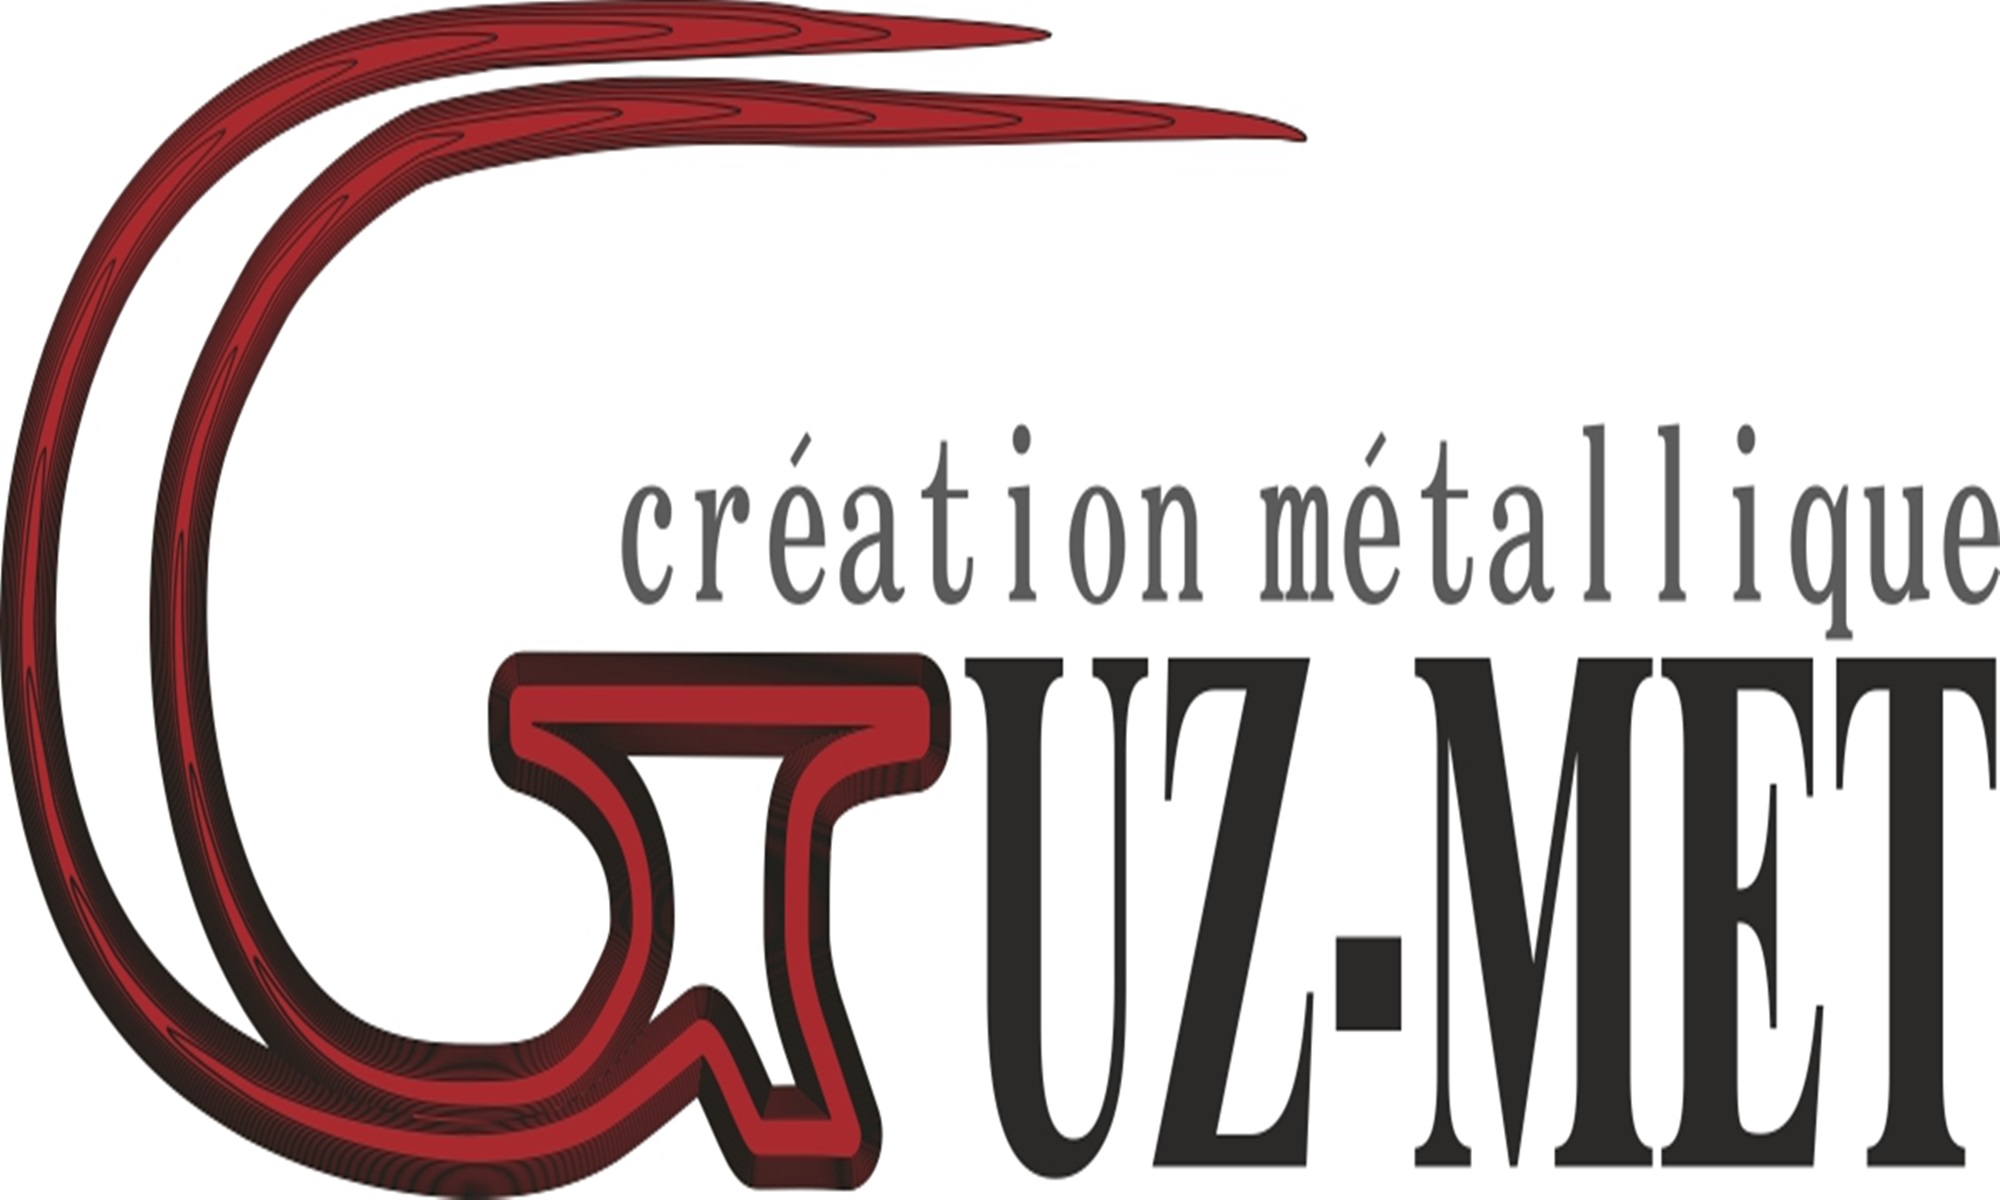 Guz-Met Création Métallique